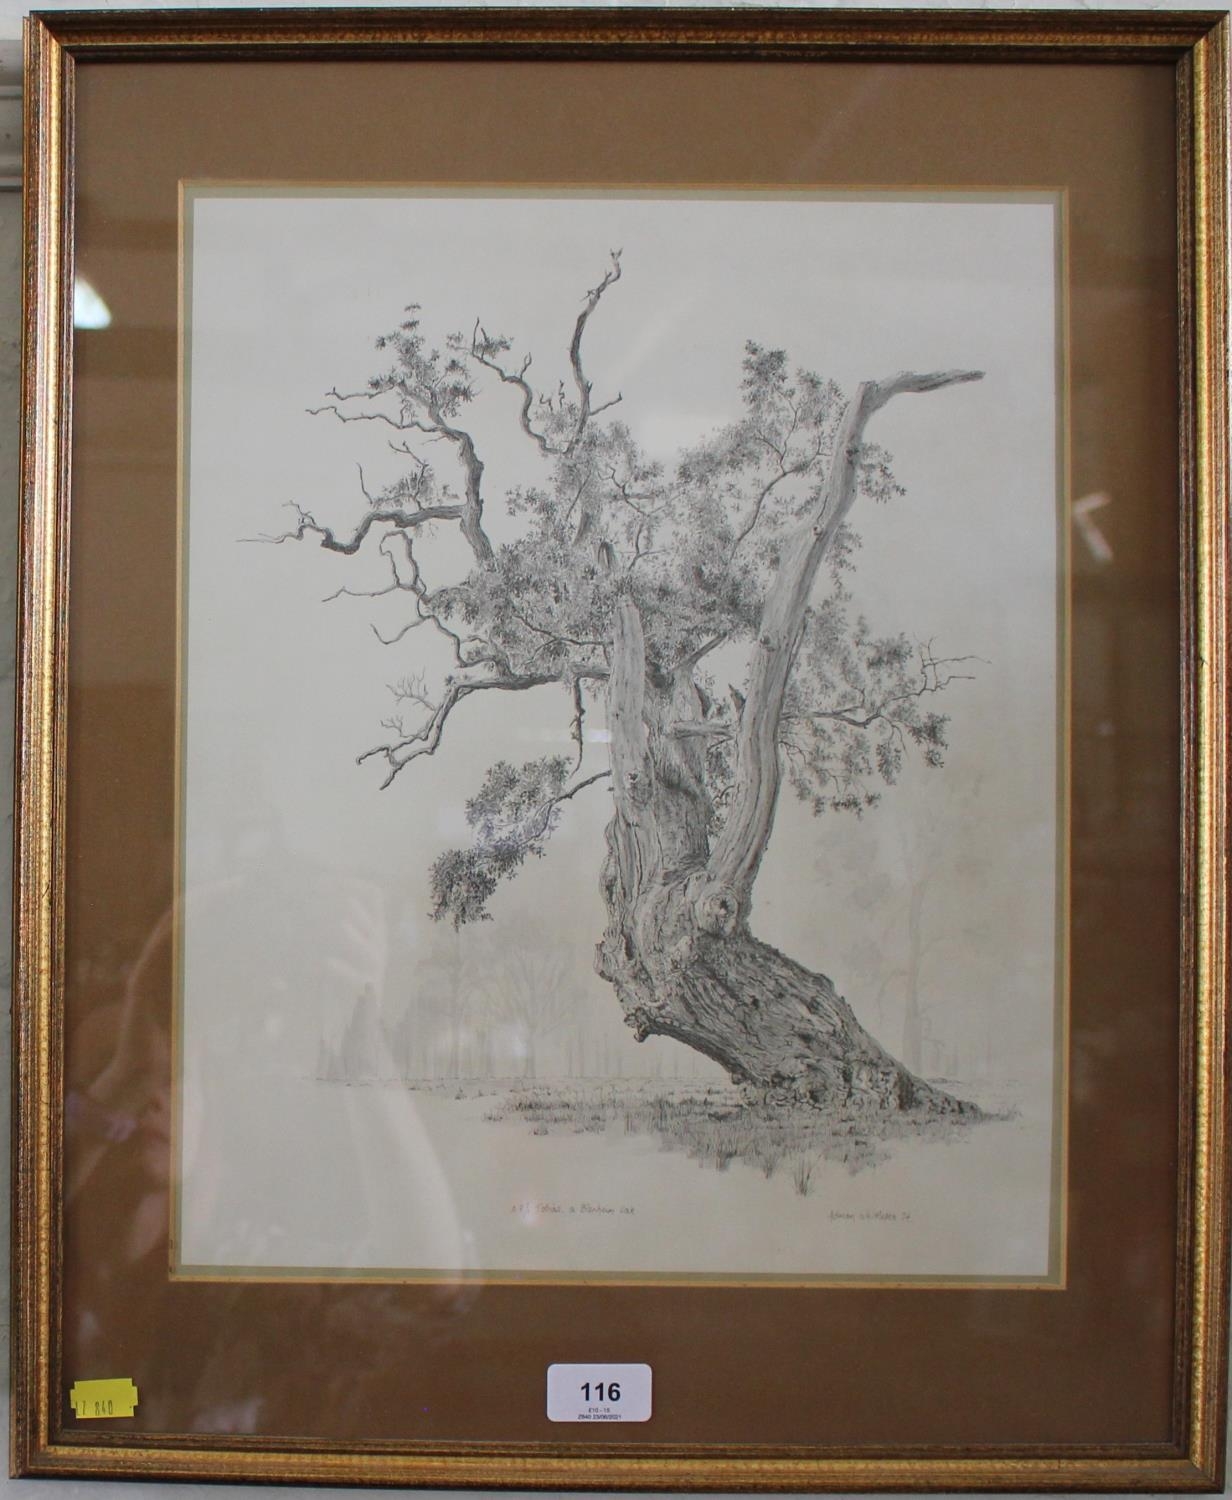 After Adrian Whittlesea Tobias, a Blenheim Oak Reproduction print, artist's proof 40 x 32 cm